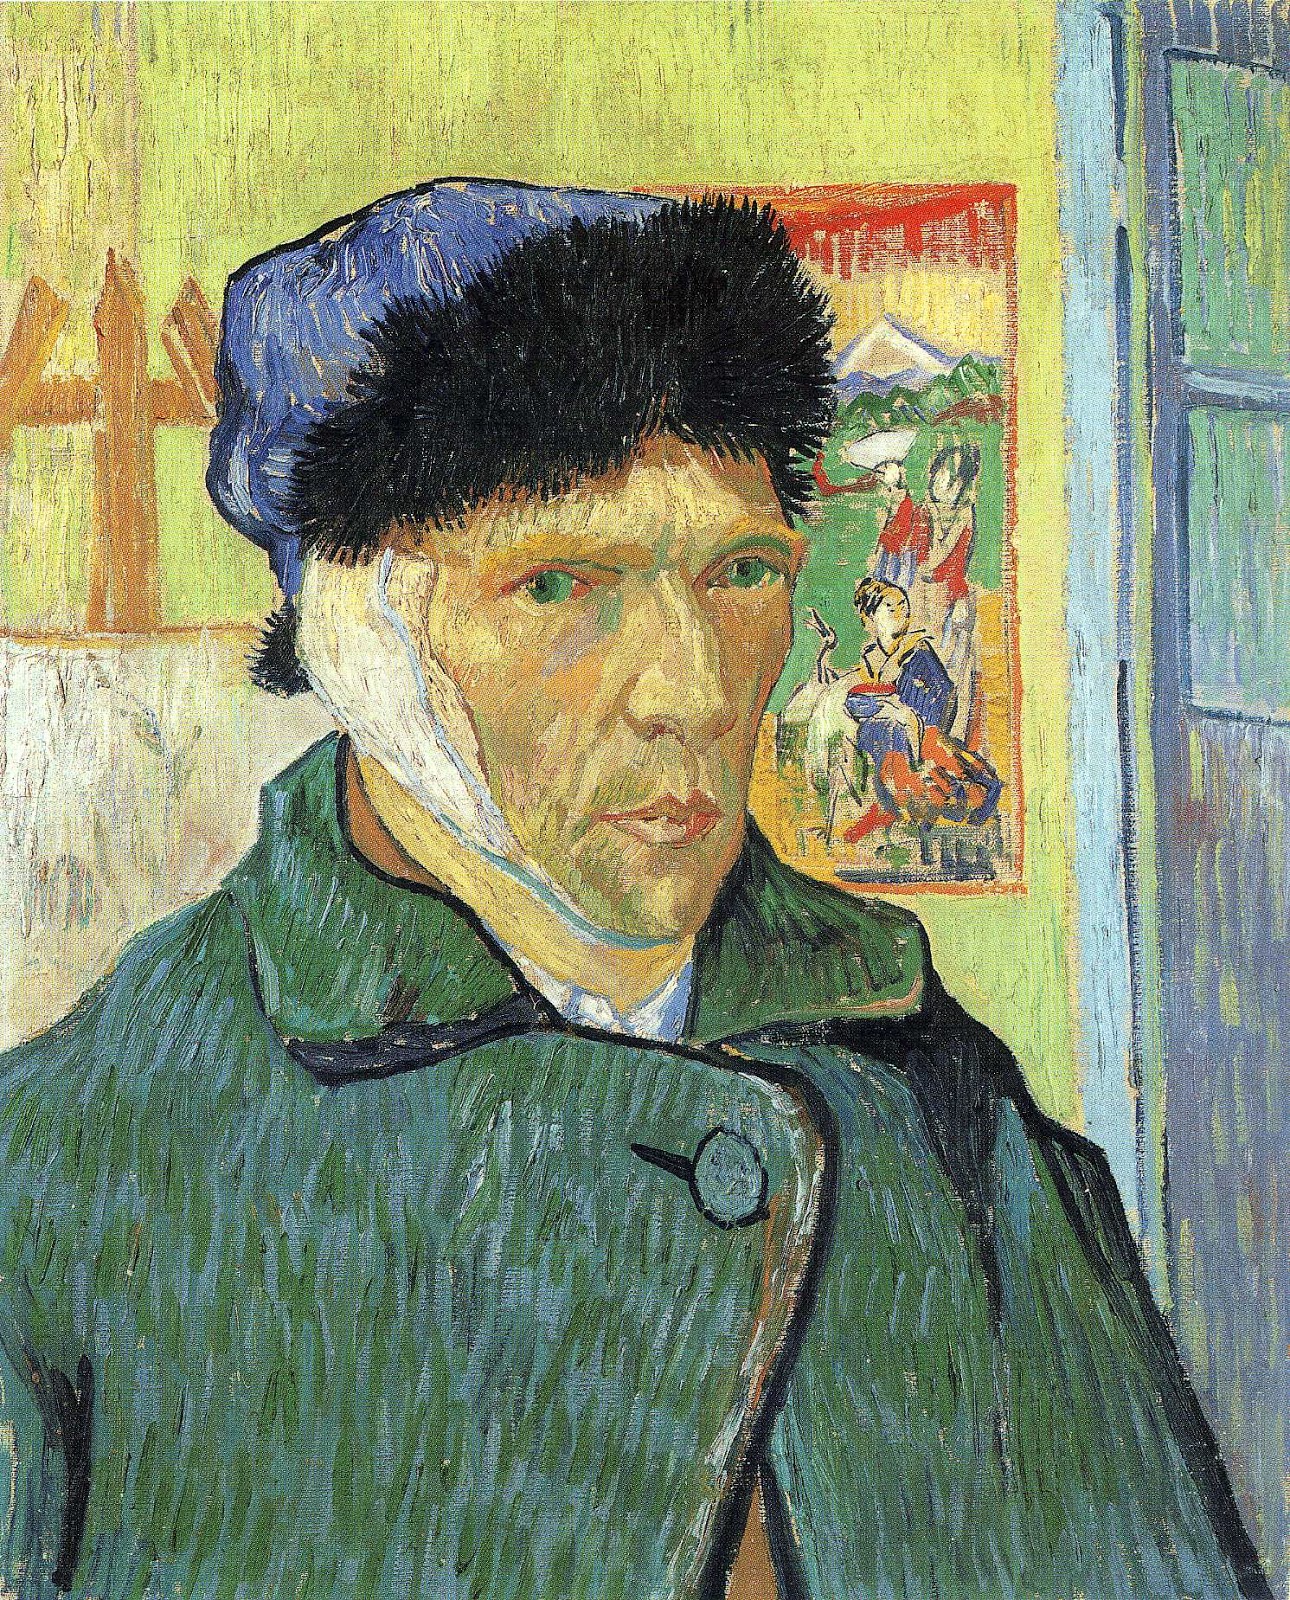 Pinturas de Van Gogh - (Pos-Impressionismo) Pintor Holandês